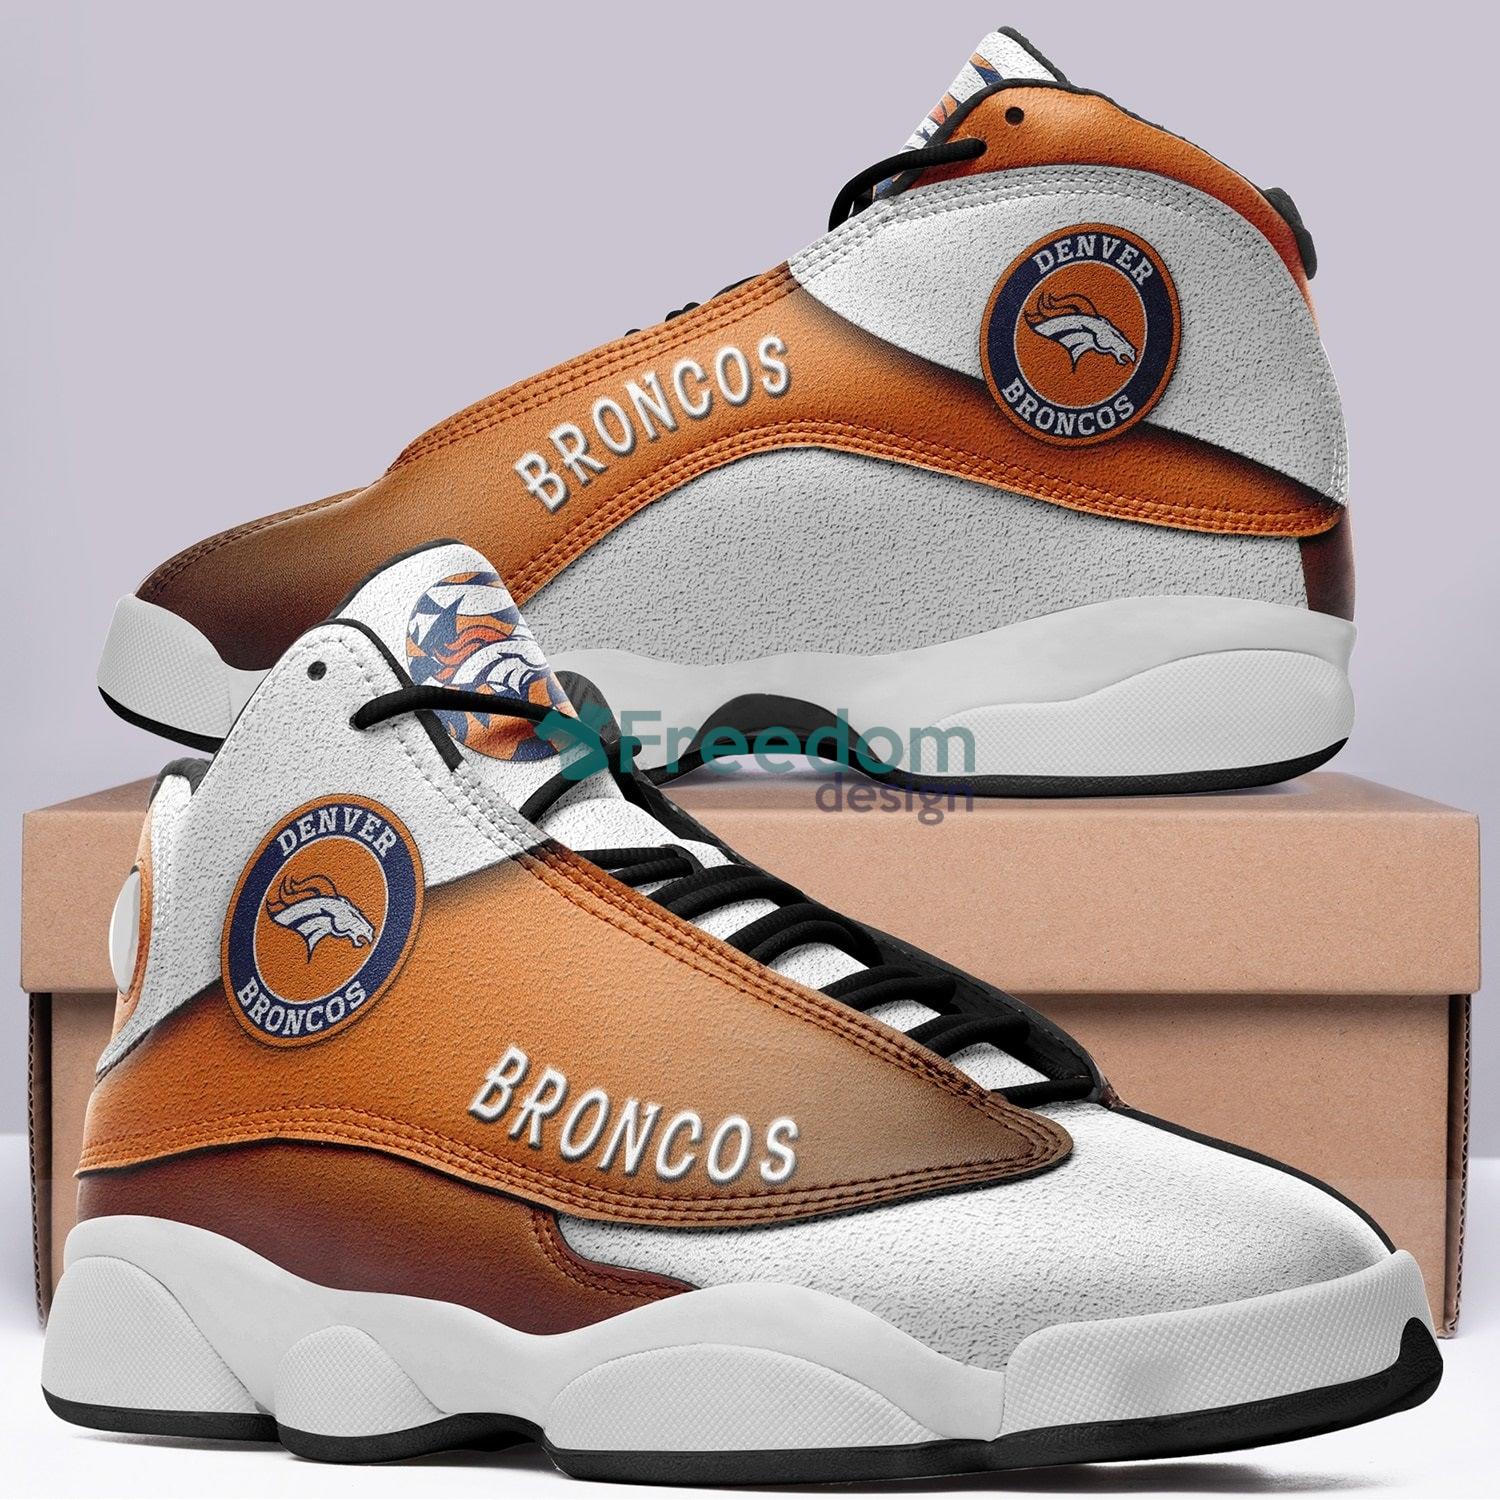 Denver Broncos Lover Air Jordan 13 Sneaker Shoes For Fans